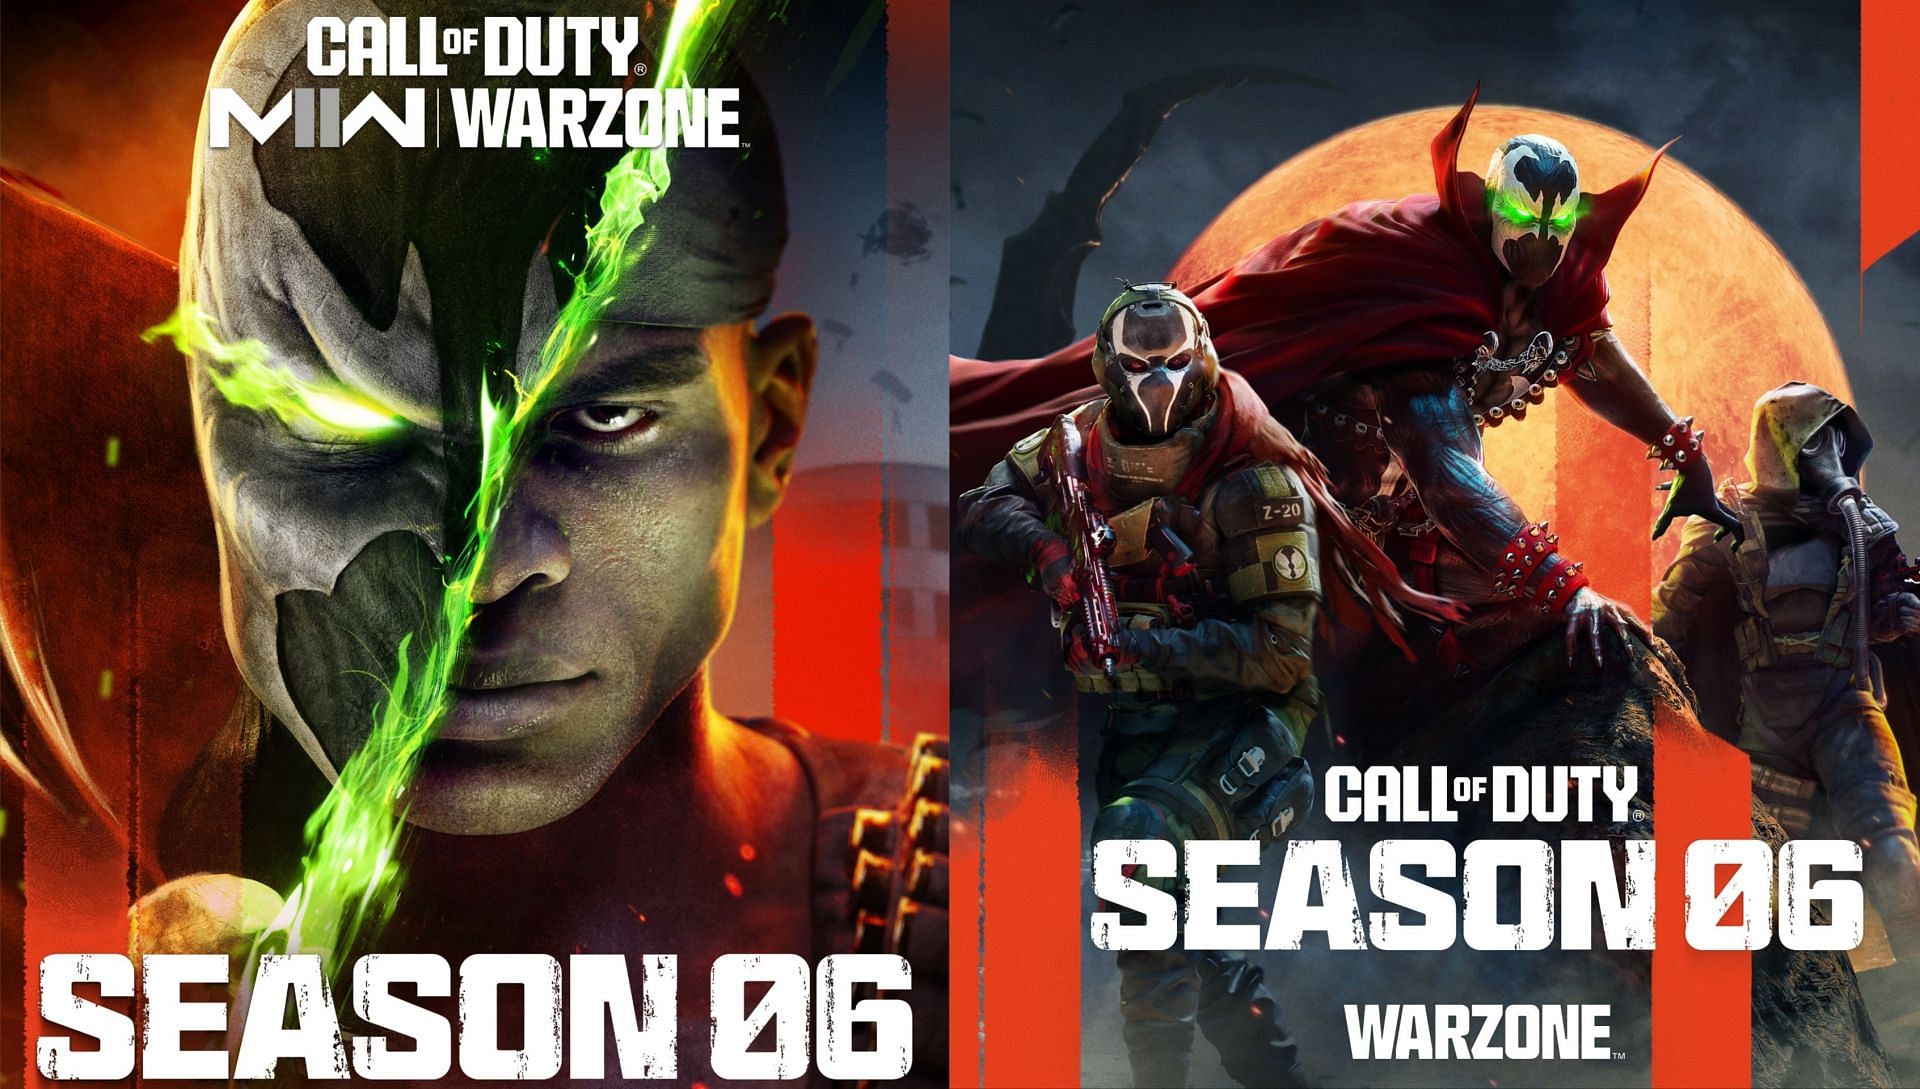 Warzone 2 and Modern Warfare 2 Season 6 key art officially revealed